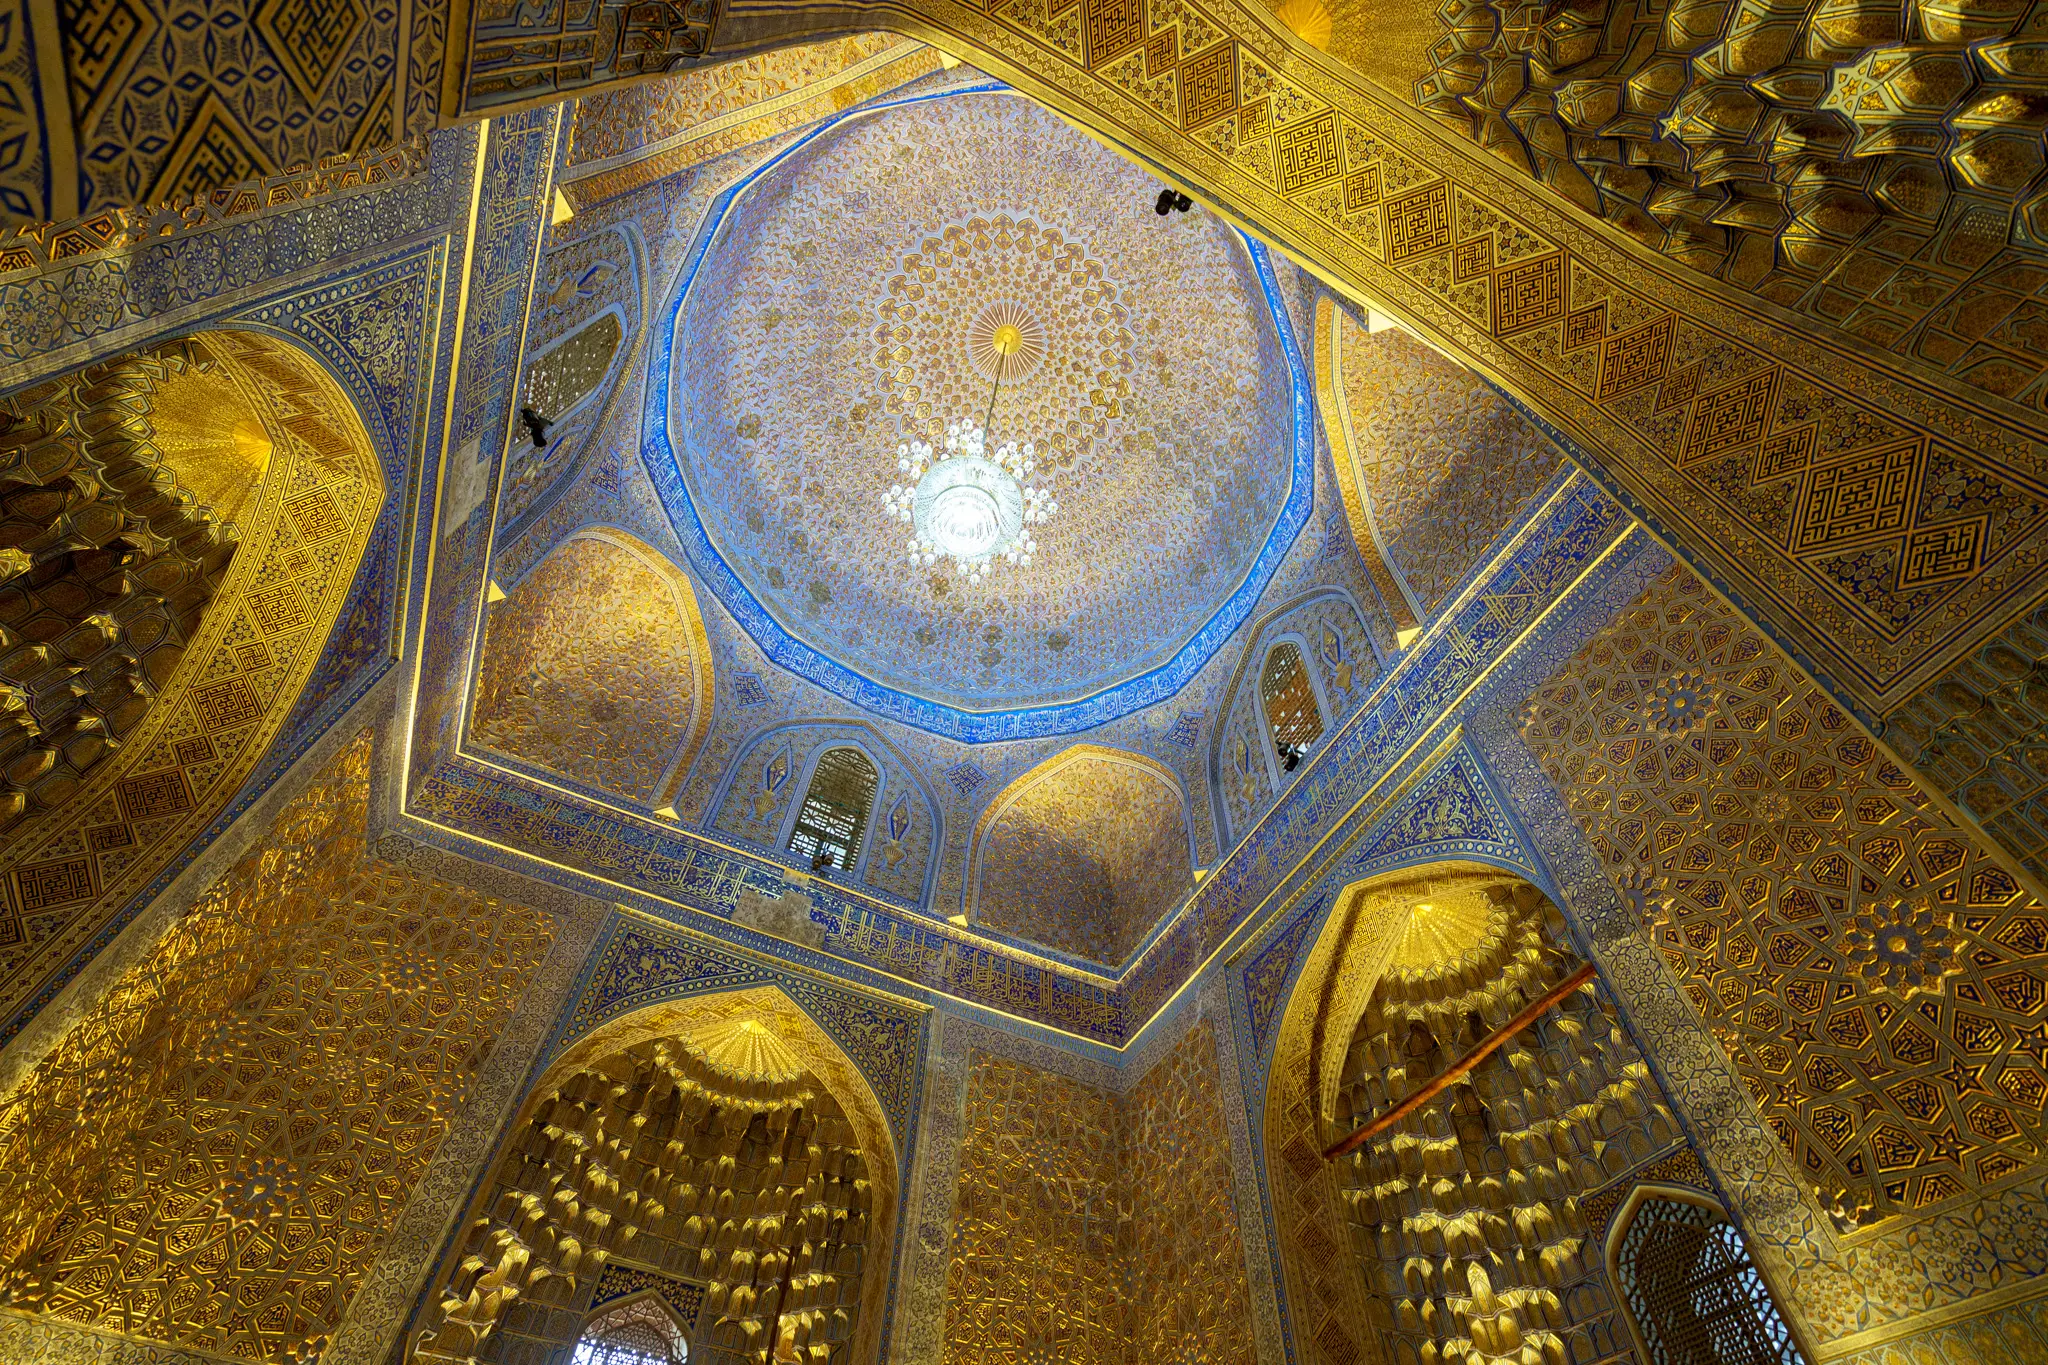 Stunning ceiling in Timur's mausoleum